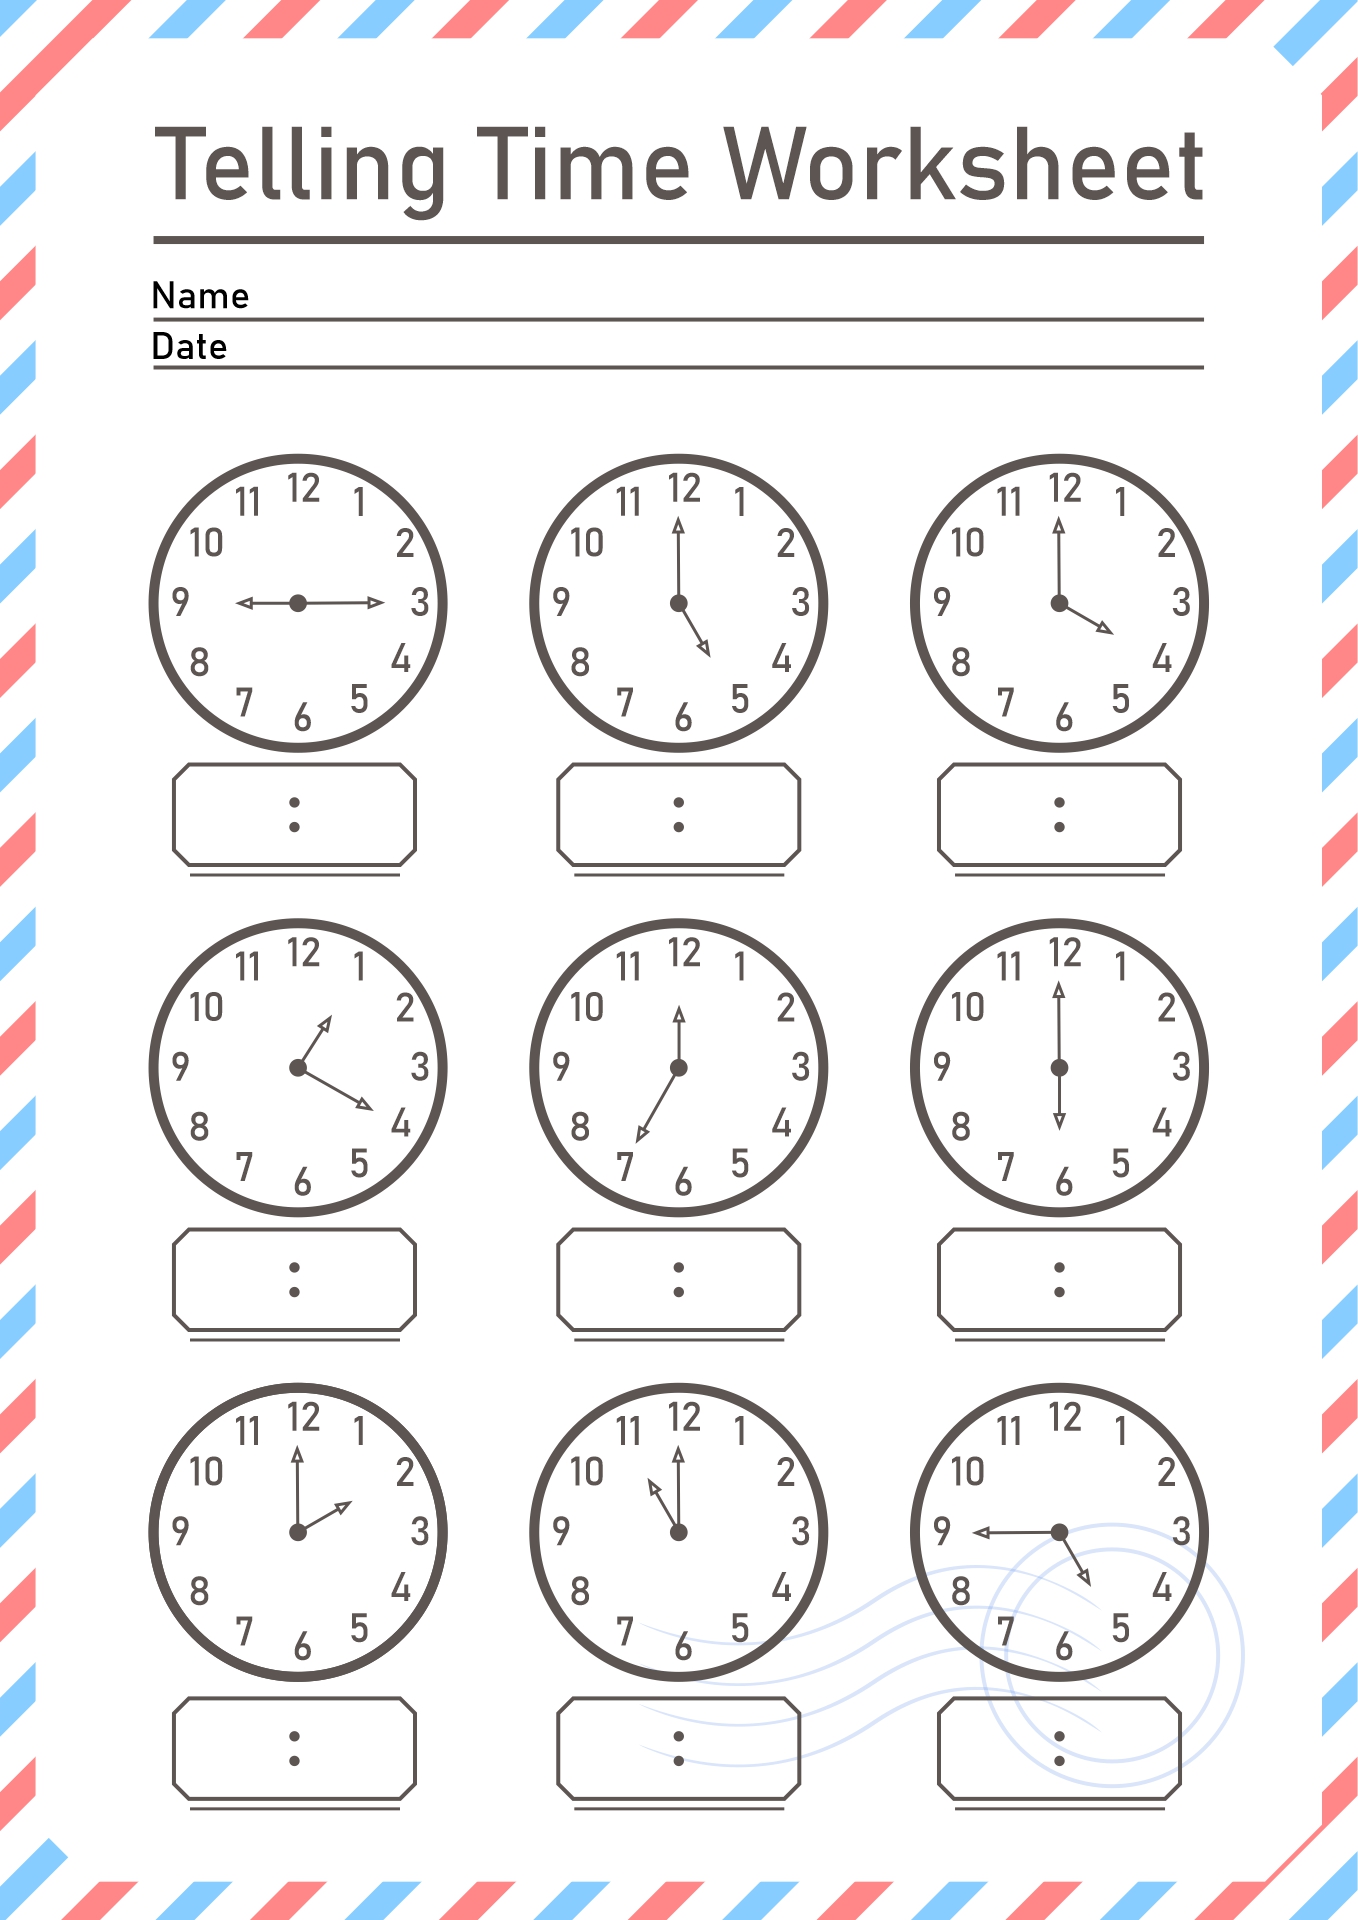 Telling Time Worksheets Grade 2 Image